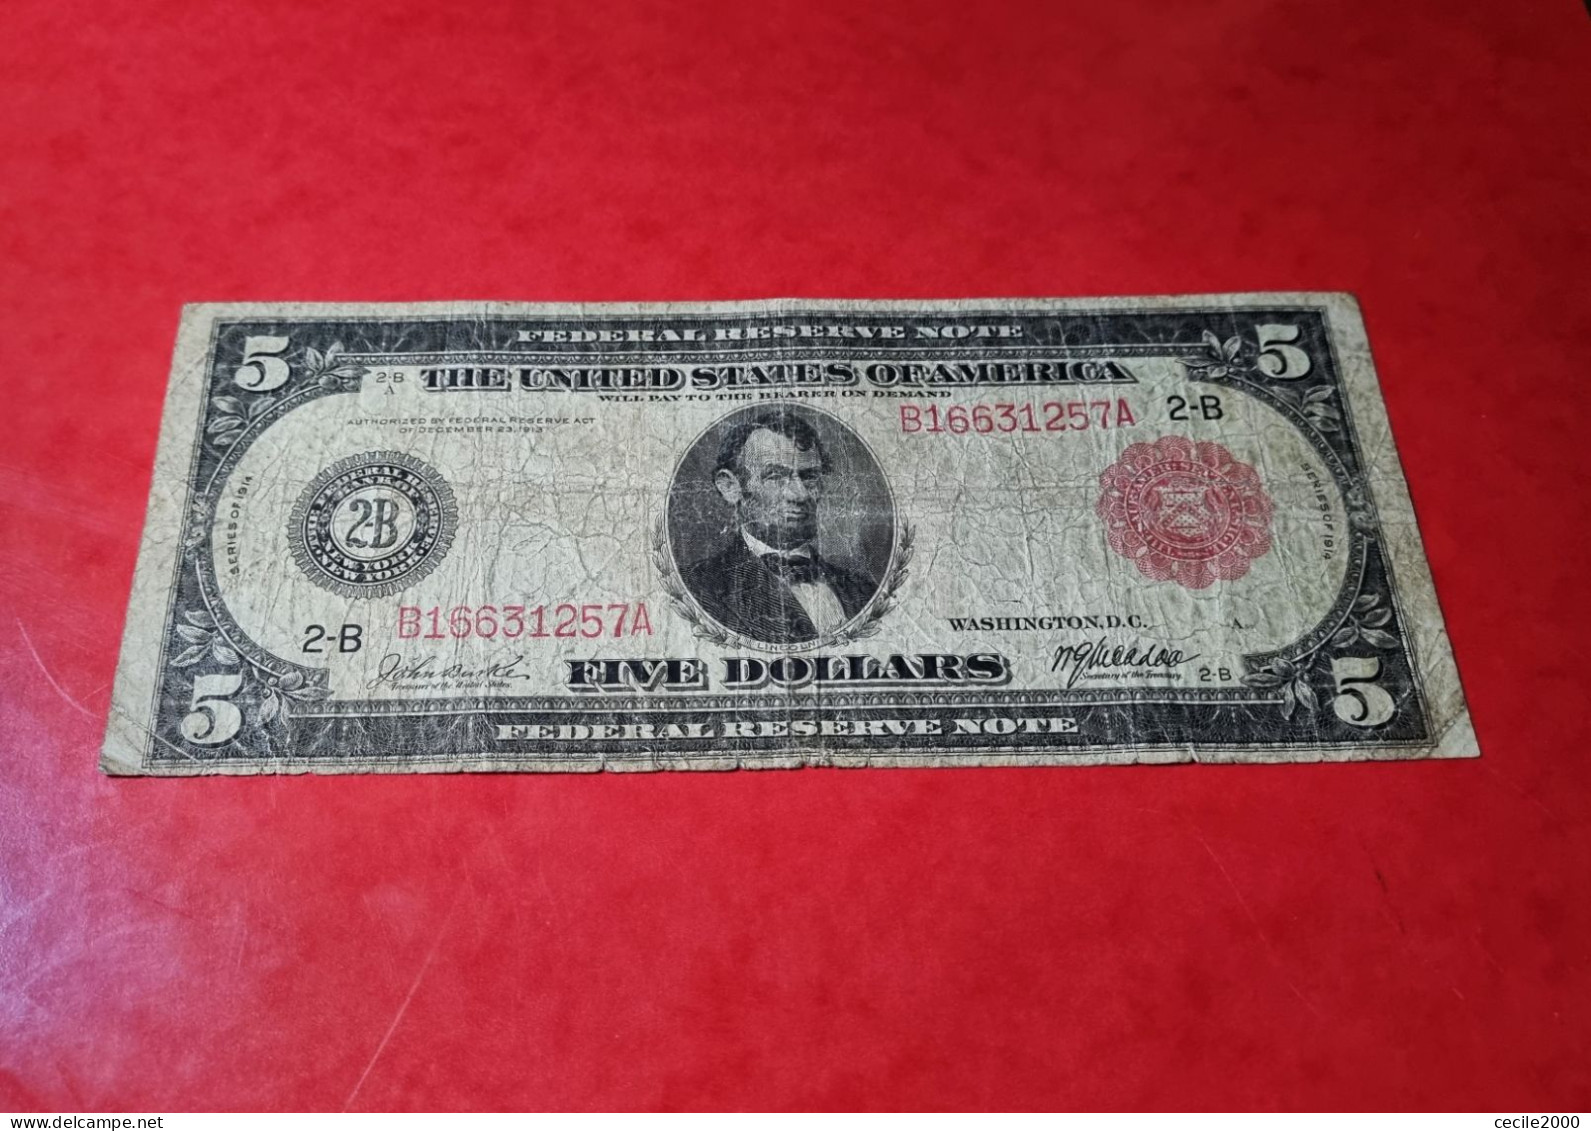 SCARCE 1914 USA $5 DOLLARS *RED SEAL* UNITED STATES BANKNOTE F BILLETE ESTADOS UNIDOS COMPRAS MULTIPLES CONSULTAR - Billetes De Estados Unidos (1862-1923)